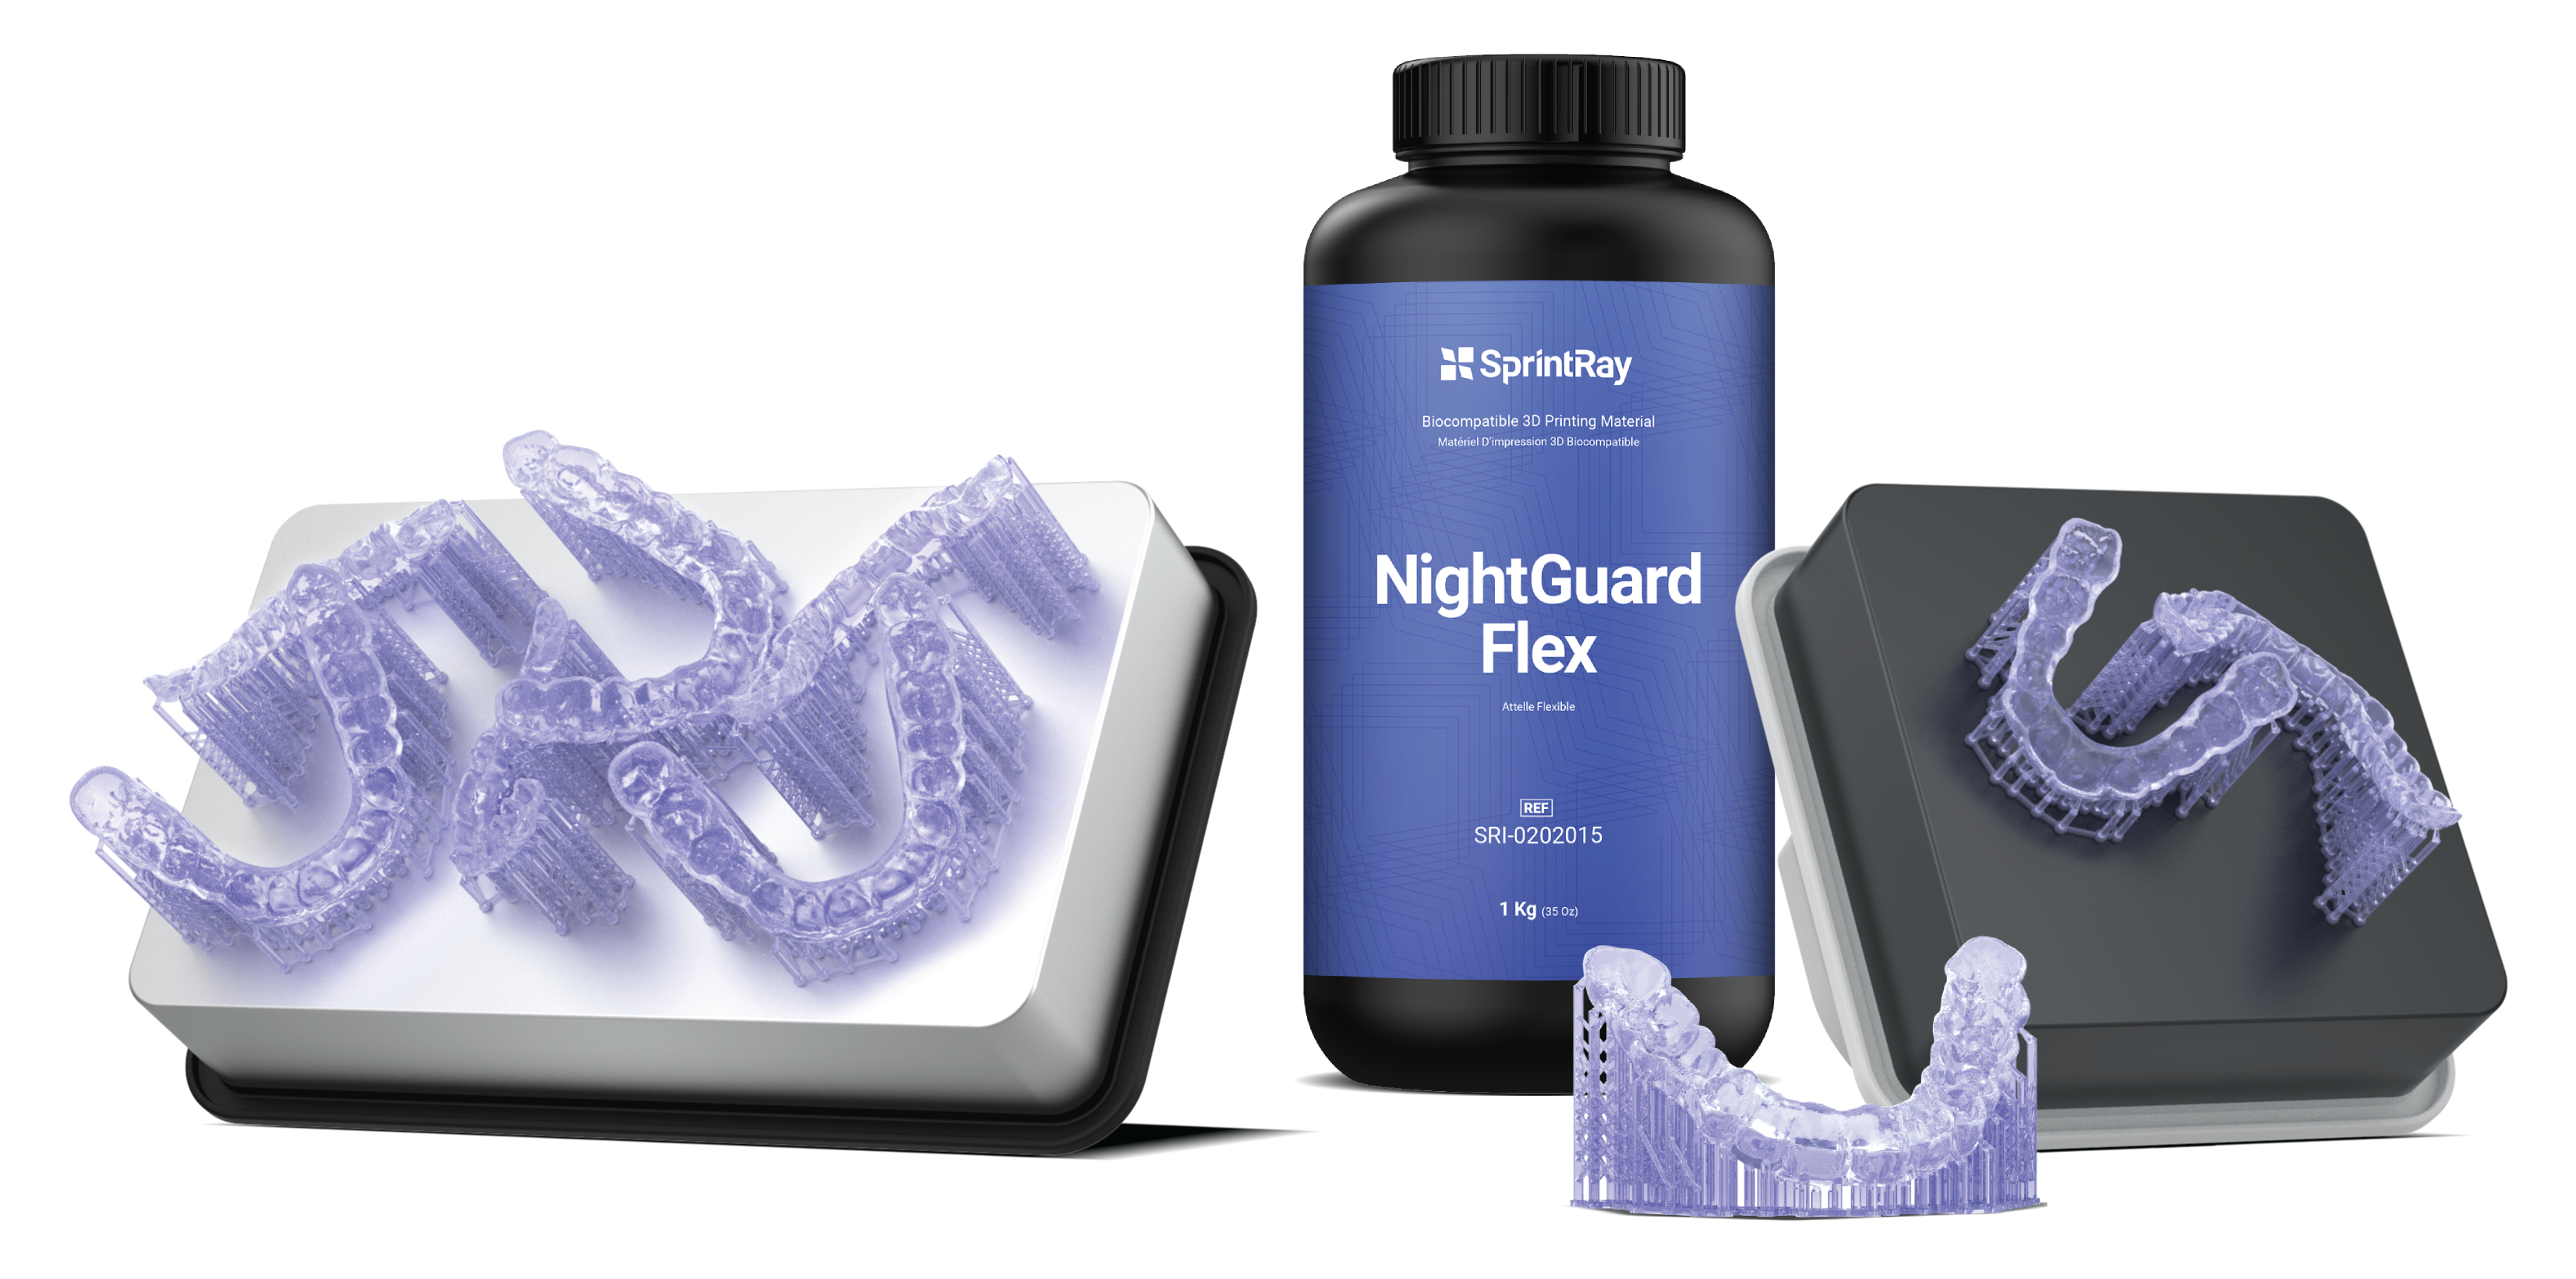 Nightguard Flex from SprintRay